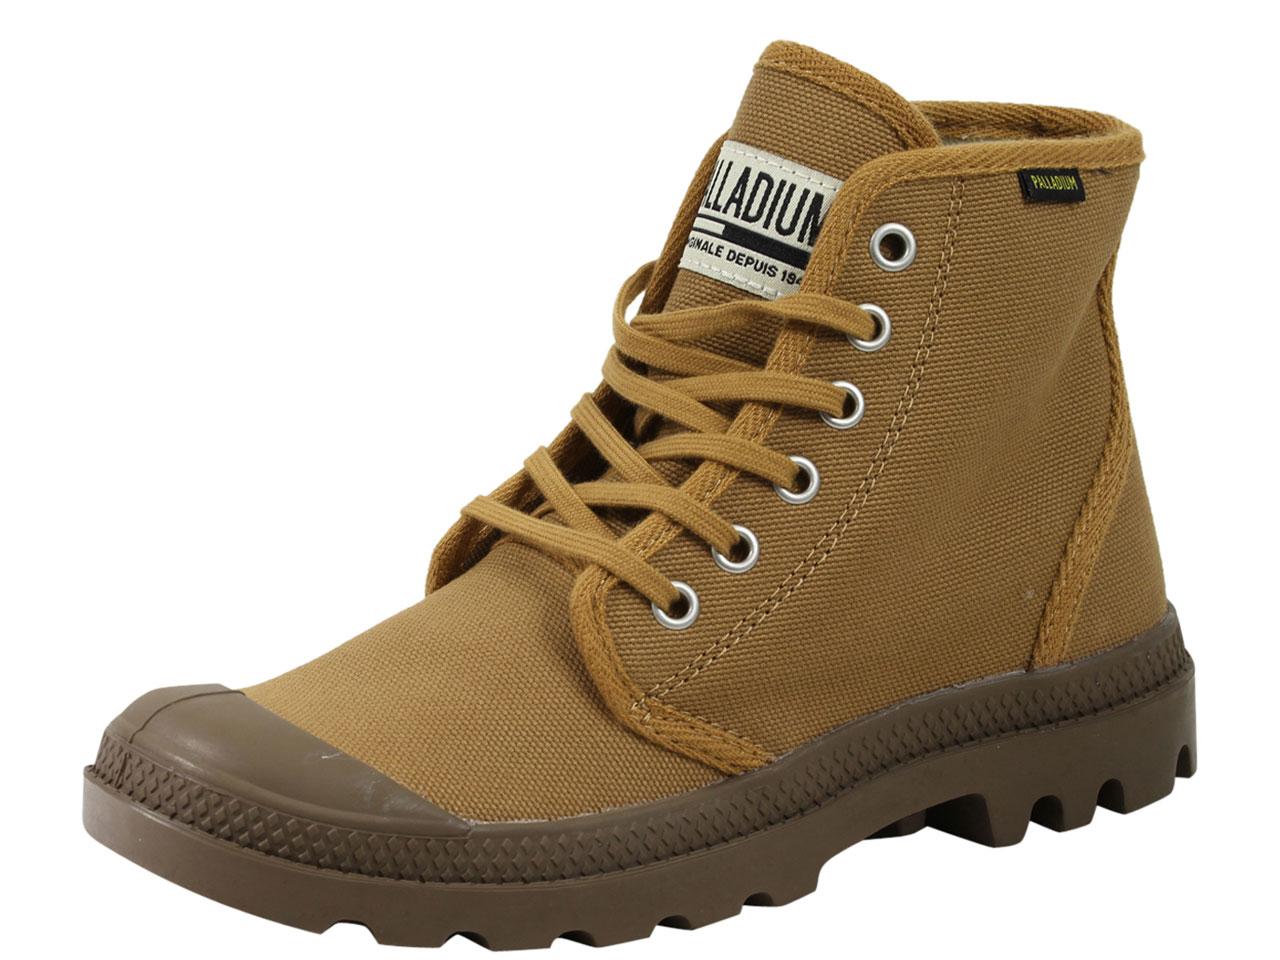 Palladium Men's Pampa Hi Originale Chukka Boots Shoes - Brown - 6.5 D(M) US/8 B(M) US